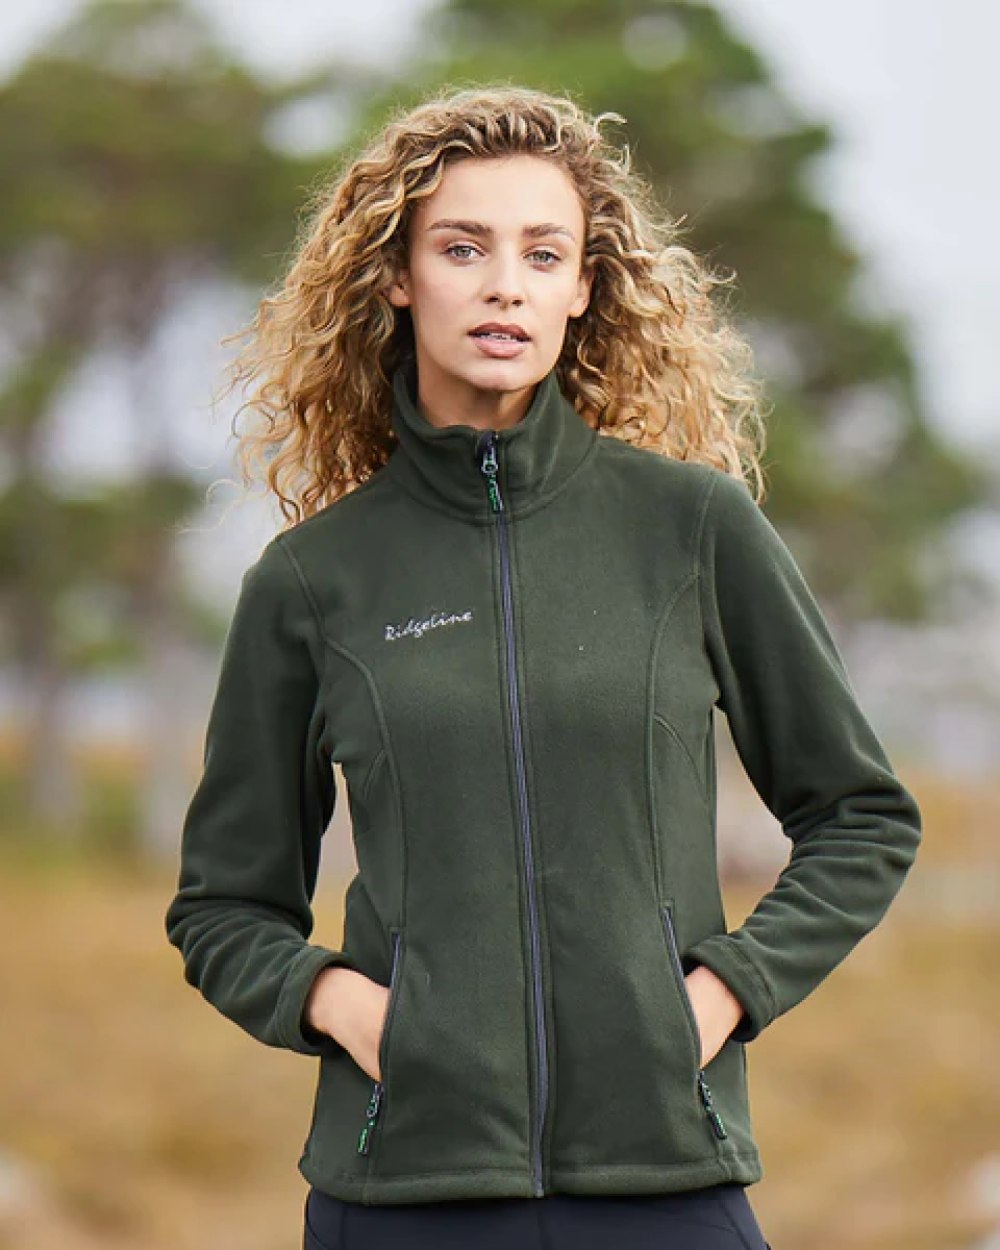 Olive coloured Ridgeline Ladies Hinterland Fleece worn by model outdoors 